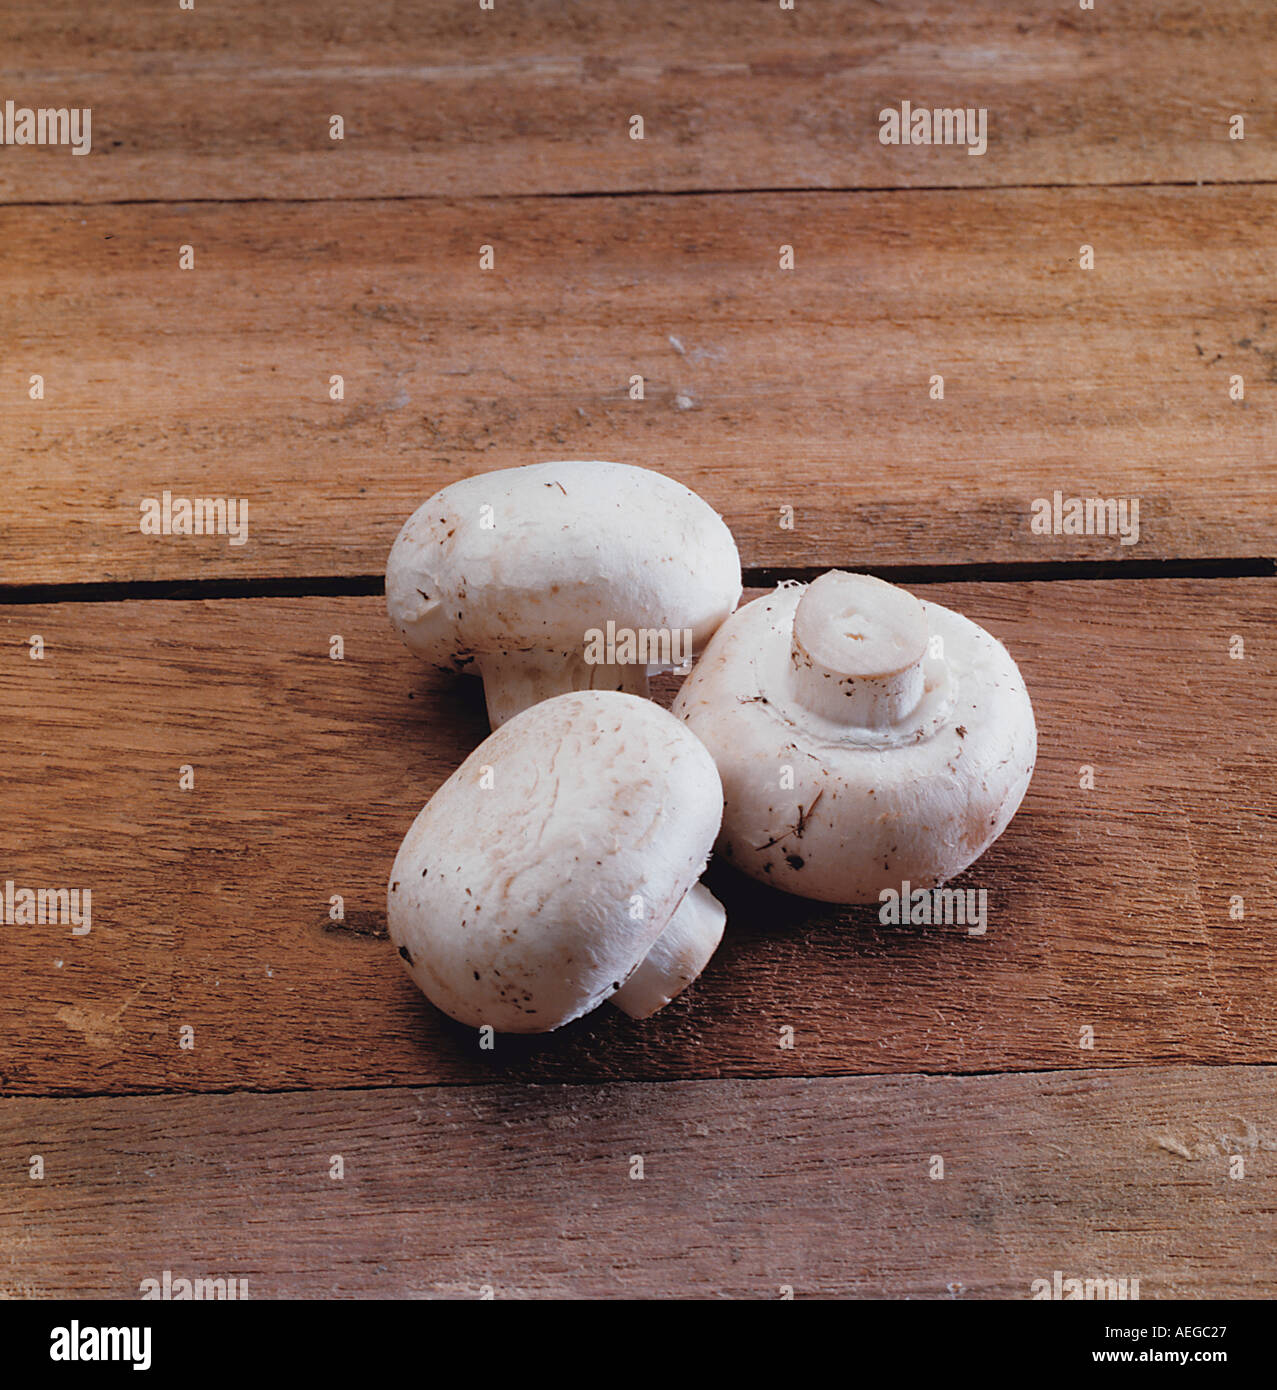 Food mushroom mushrooms three white pale fungi cap like tops natural garnish round food Stock Photo